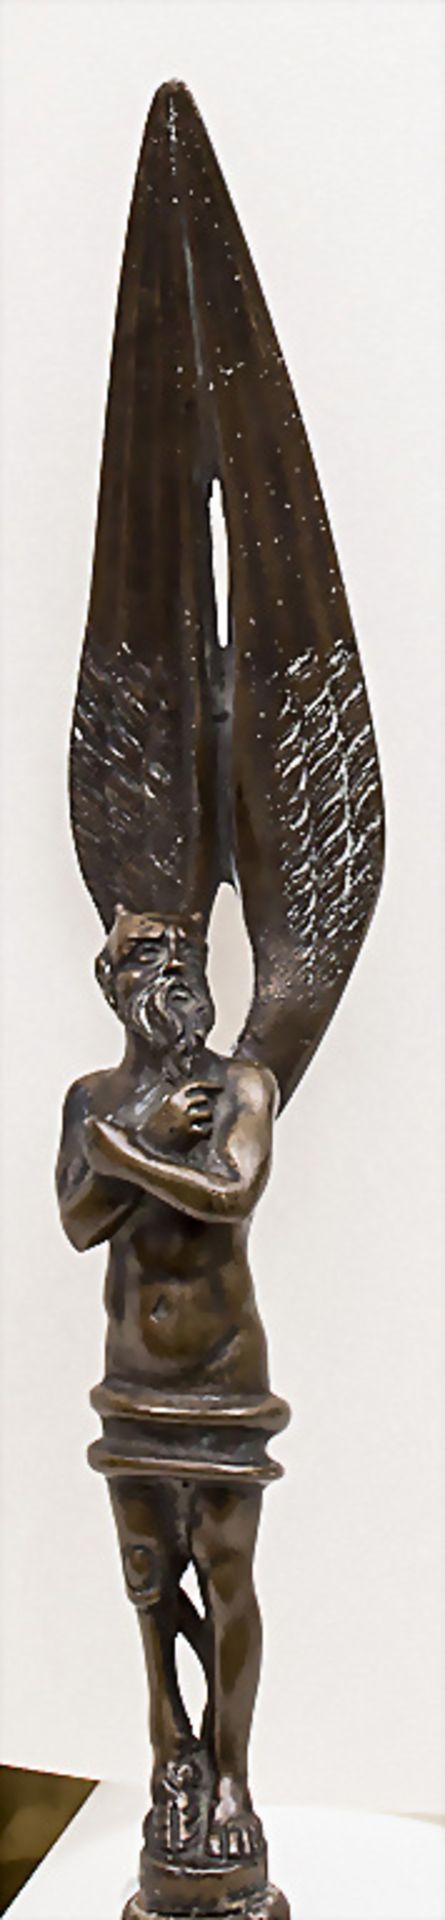 Bronze Brieföffner mit Teufels-Skulptur / A bronze letter opener with the sculpture of a devil ... - Image 3 of 3